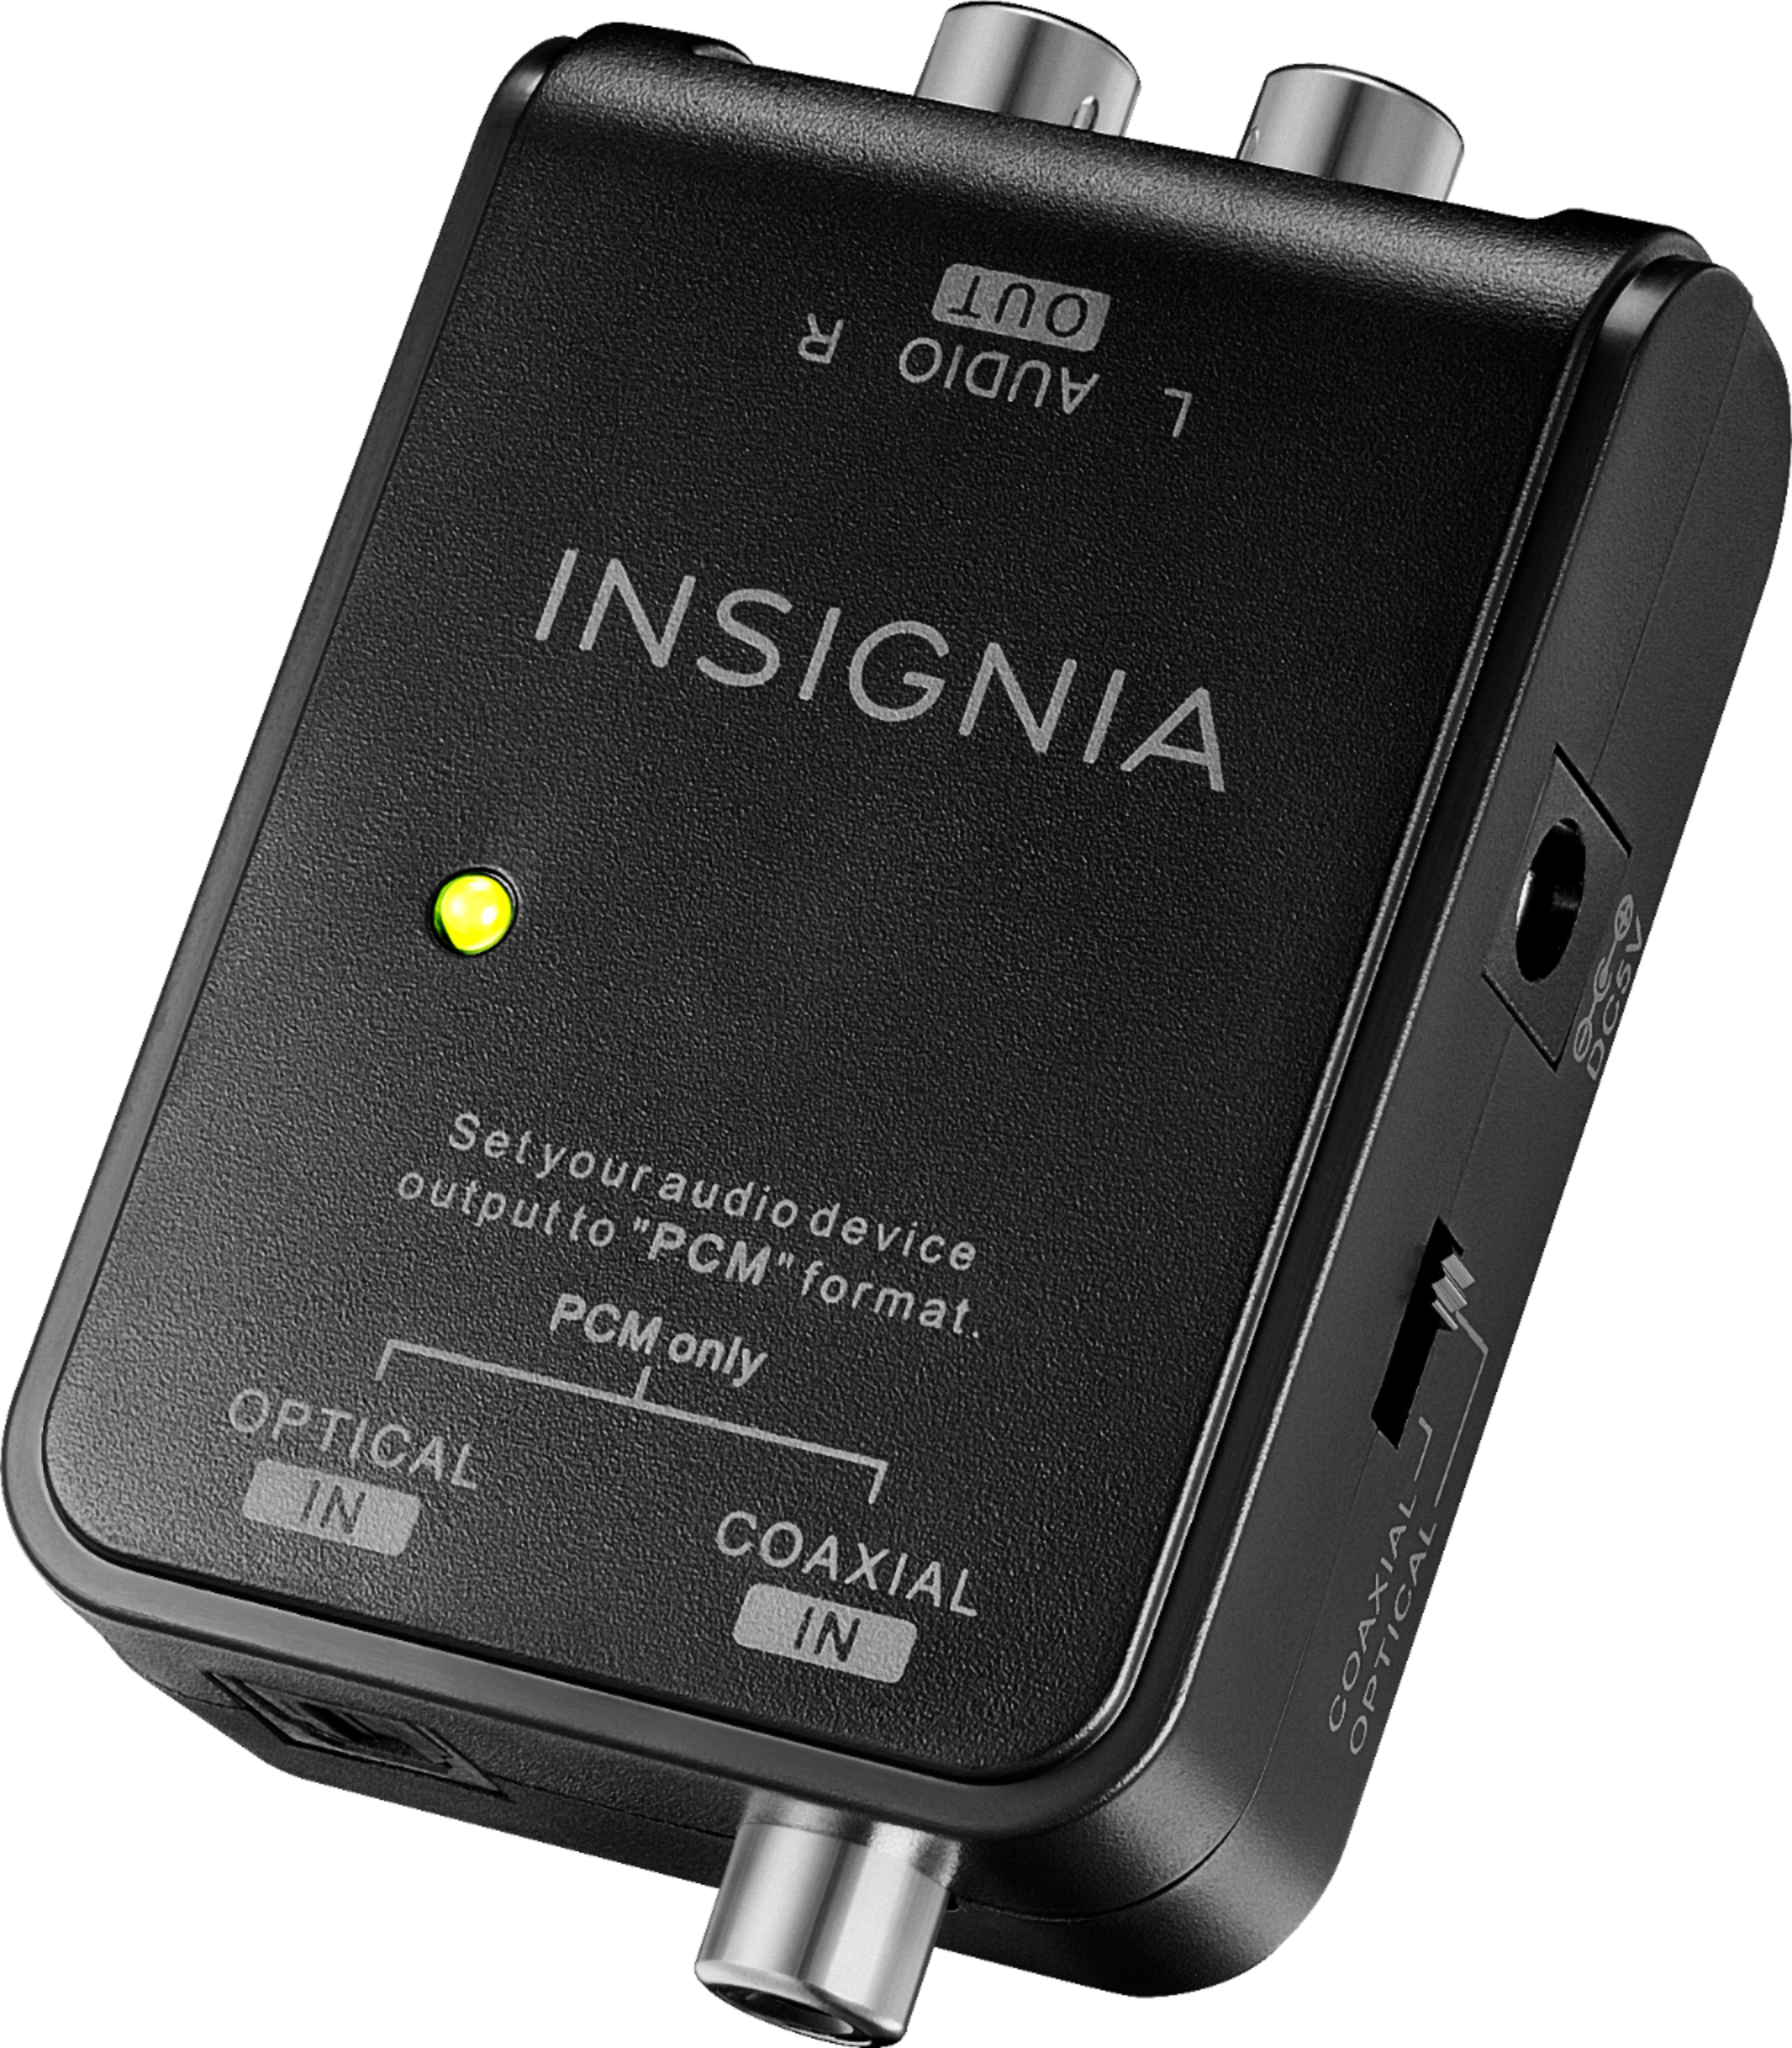 Customer Reviews Insignia Optical Coaxial Digital To Analog Audio